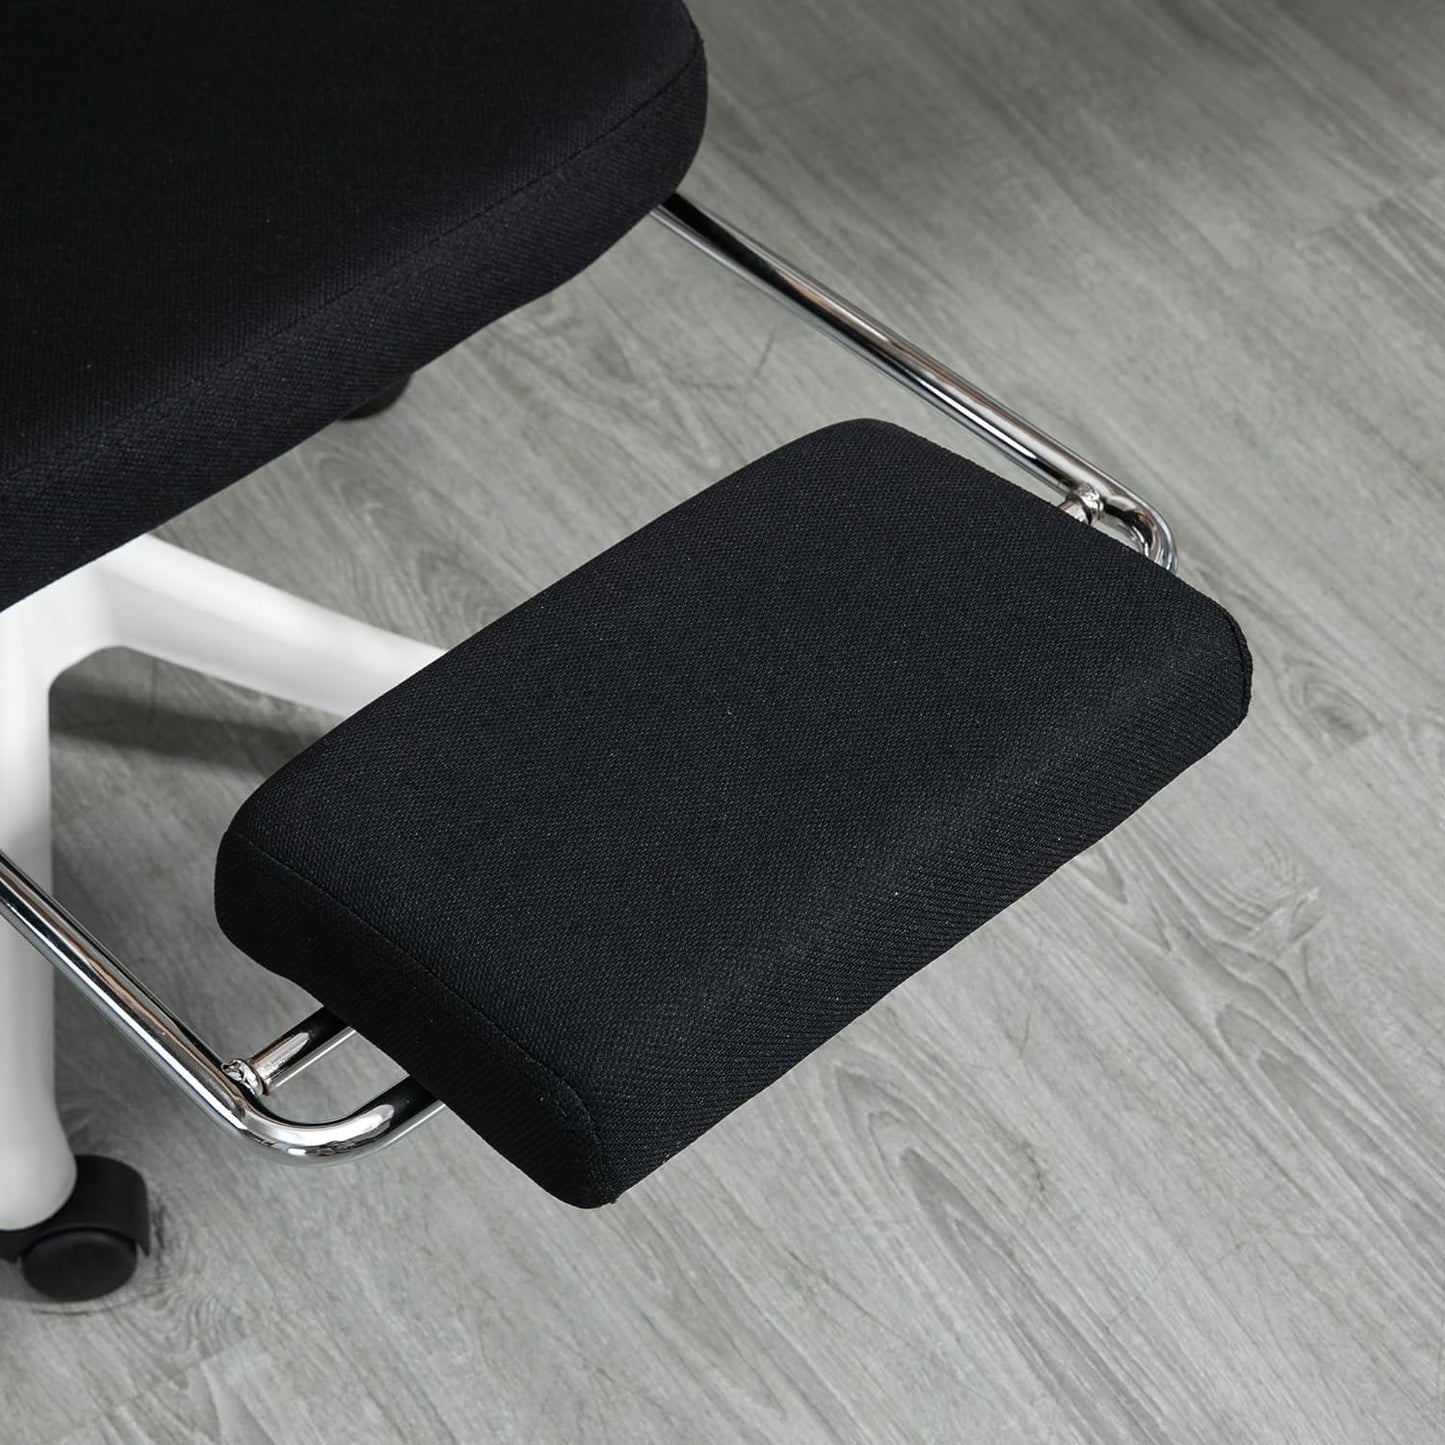 ProperAV Extra Ergonomic Reclining Adjustable Mesh Office Chair with Adjustable Headrest, Lumbar Support & Footrest - Black - maplin.co.uk